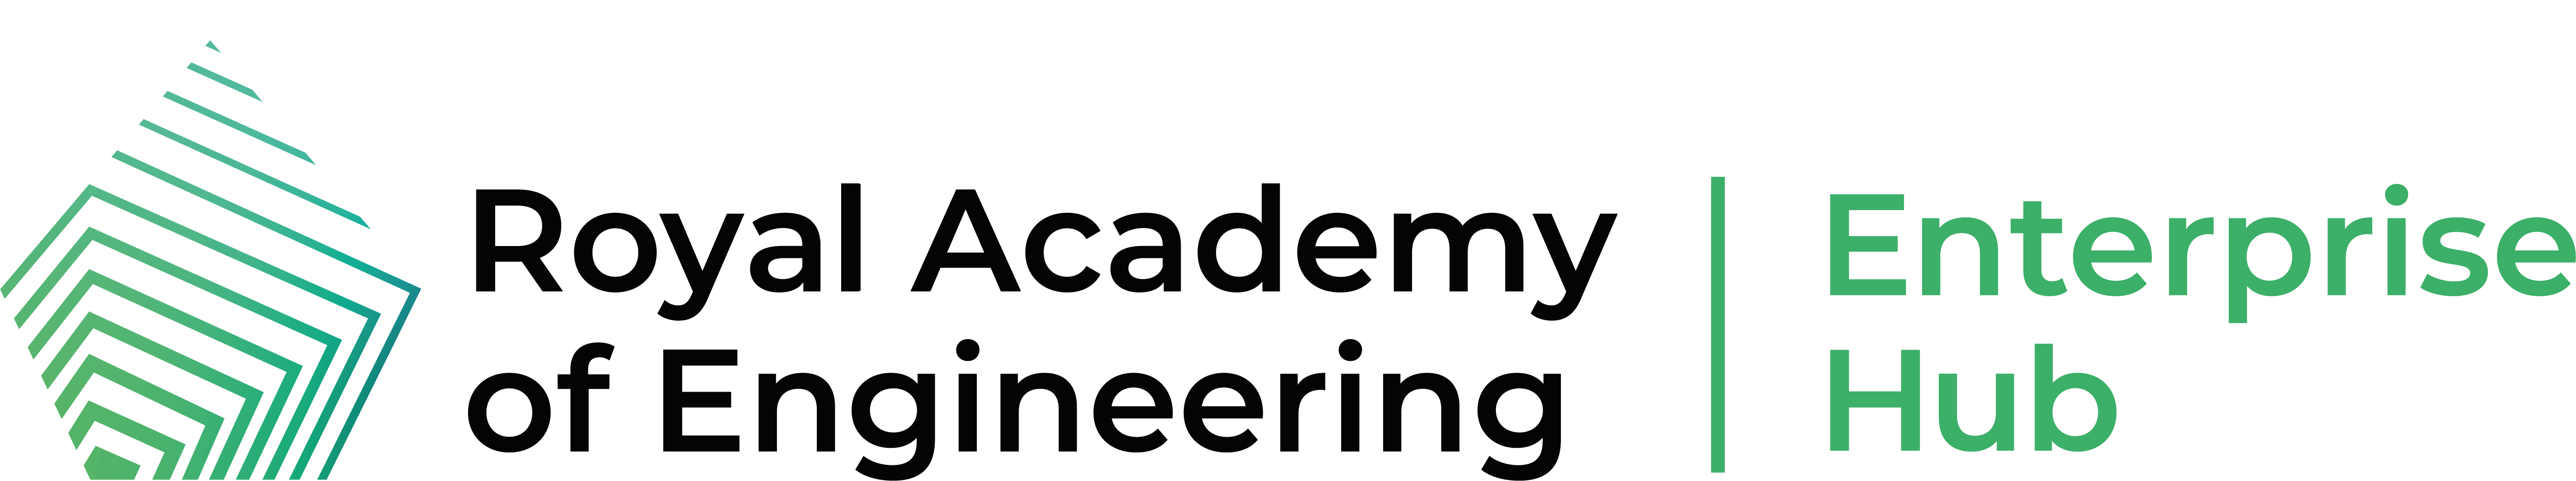 Royal Academy of Engineering Enterprise Hub NI